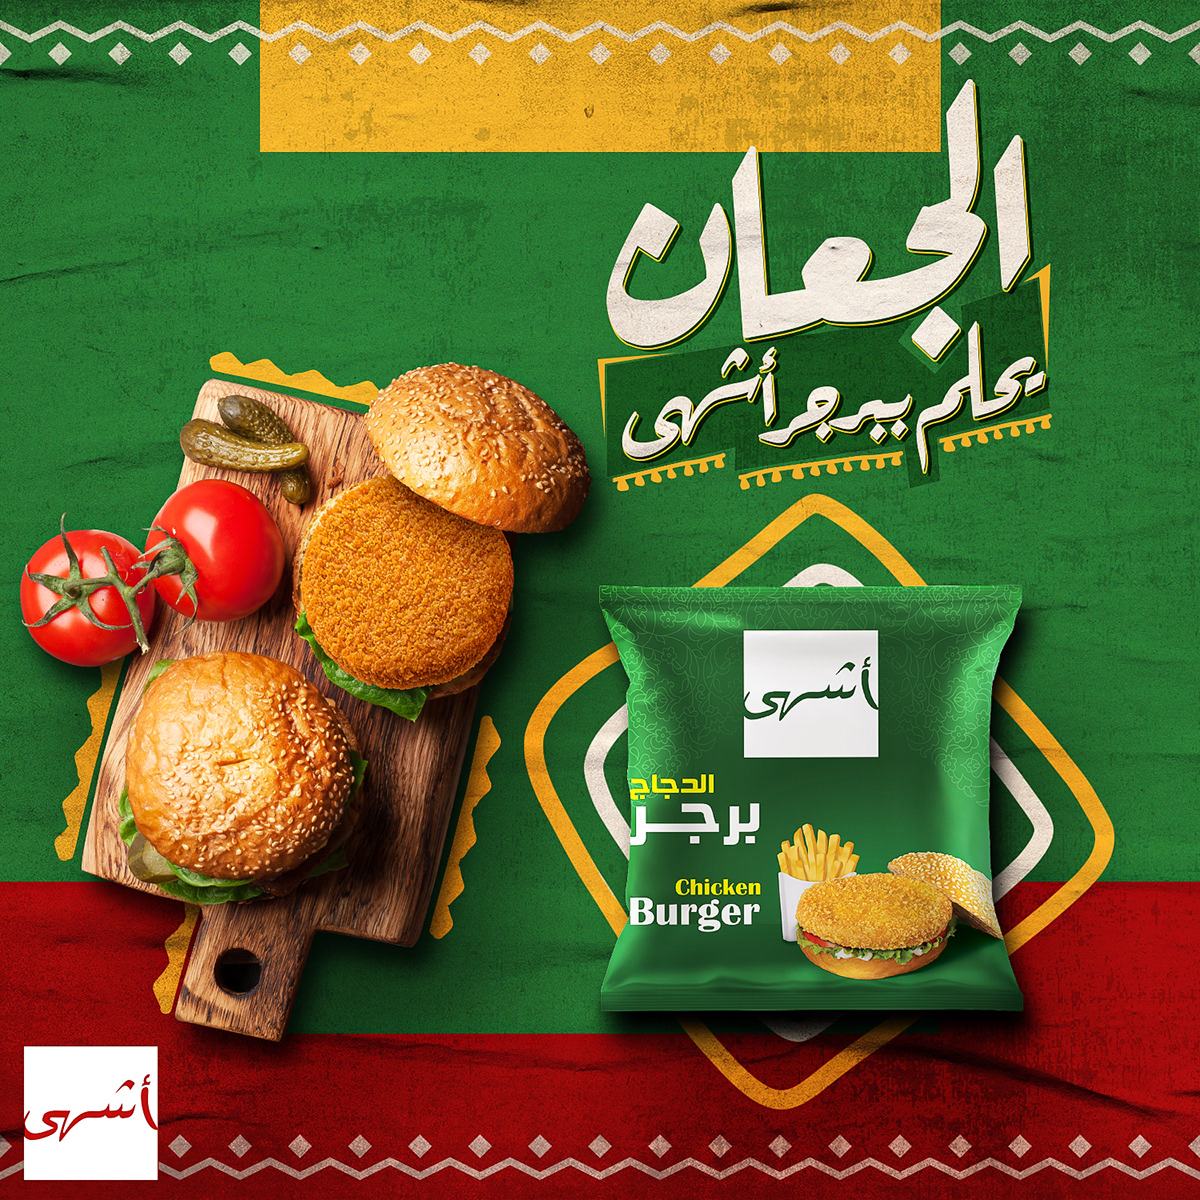 egyptian food egyption style oriantal food Retro Socialmedia vintage Food Packaging Food retouching